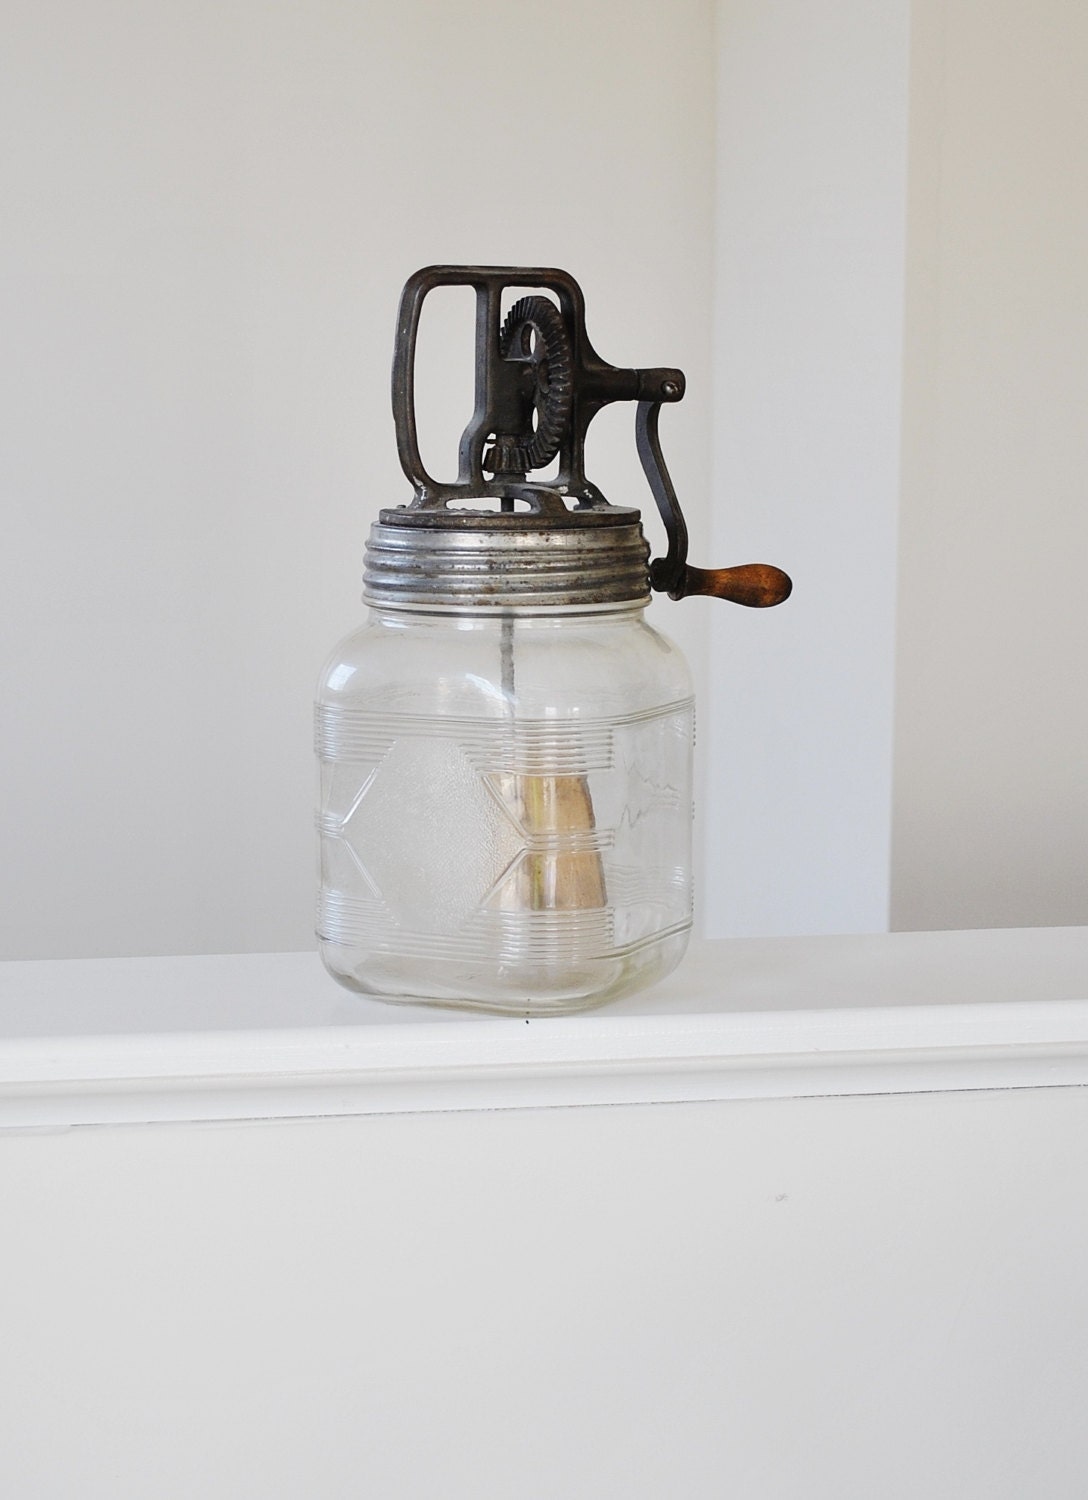 SALE-Antique butter churn/ Butter jar/ 1920s/ Antique kitchen